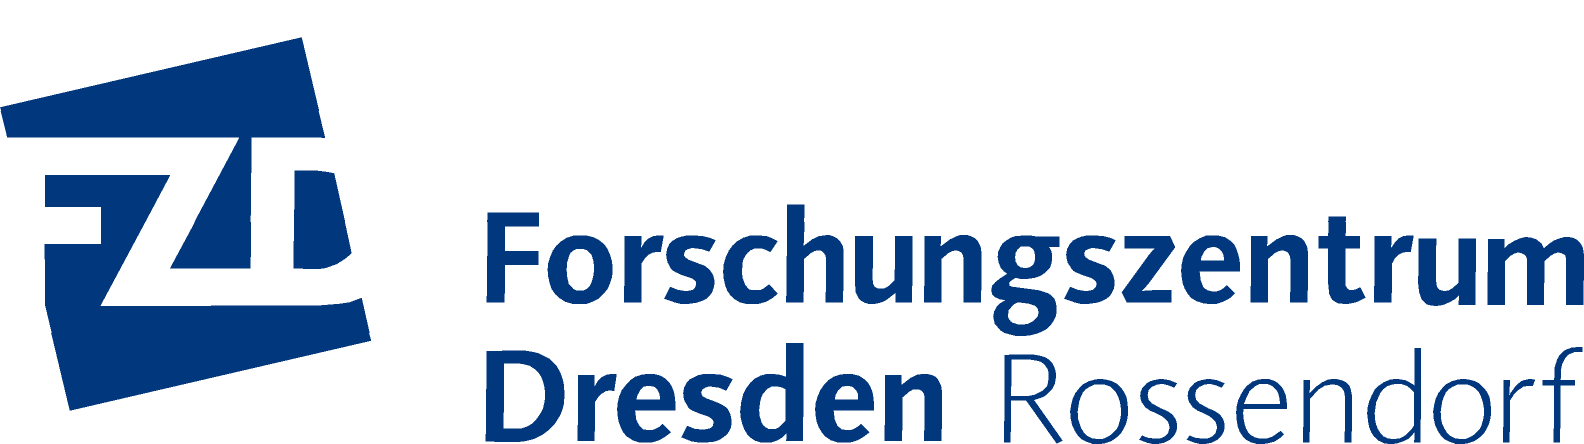 FZD Logo